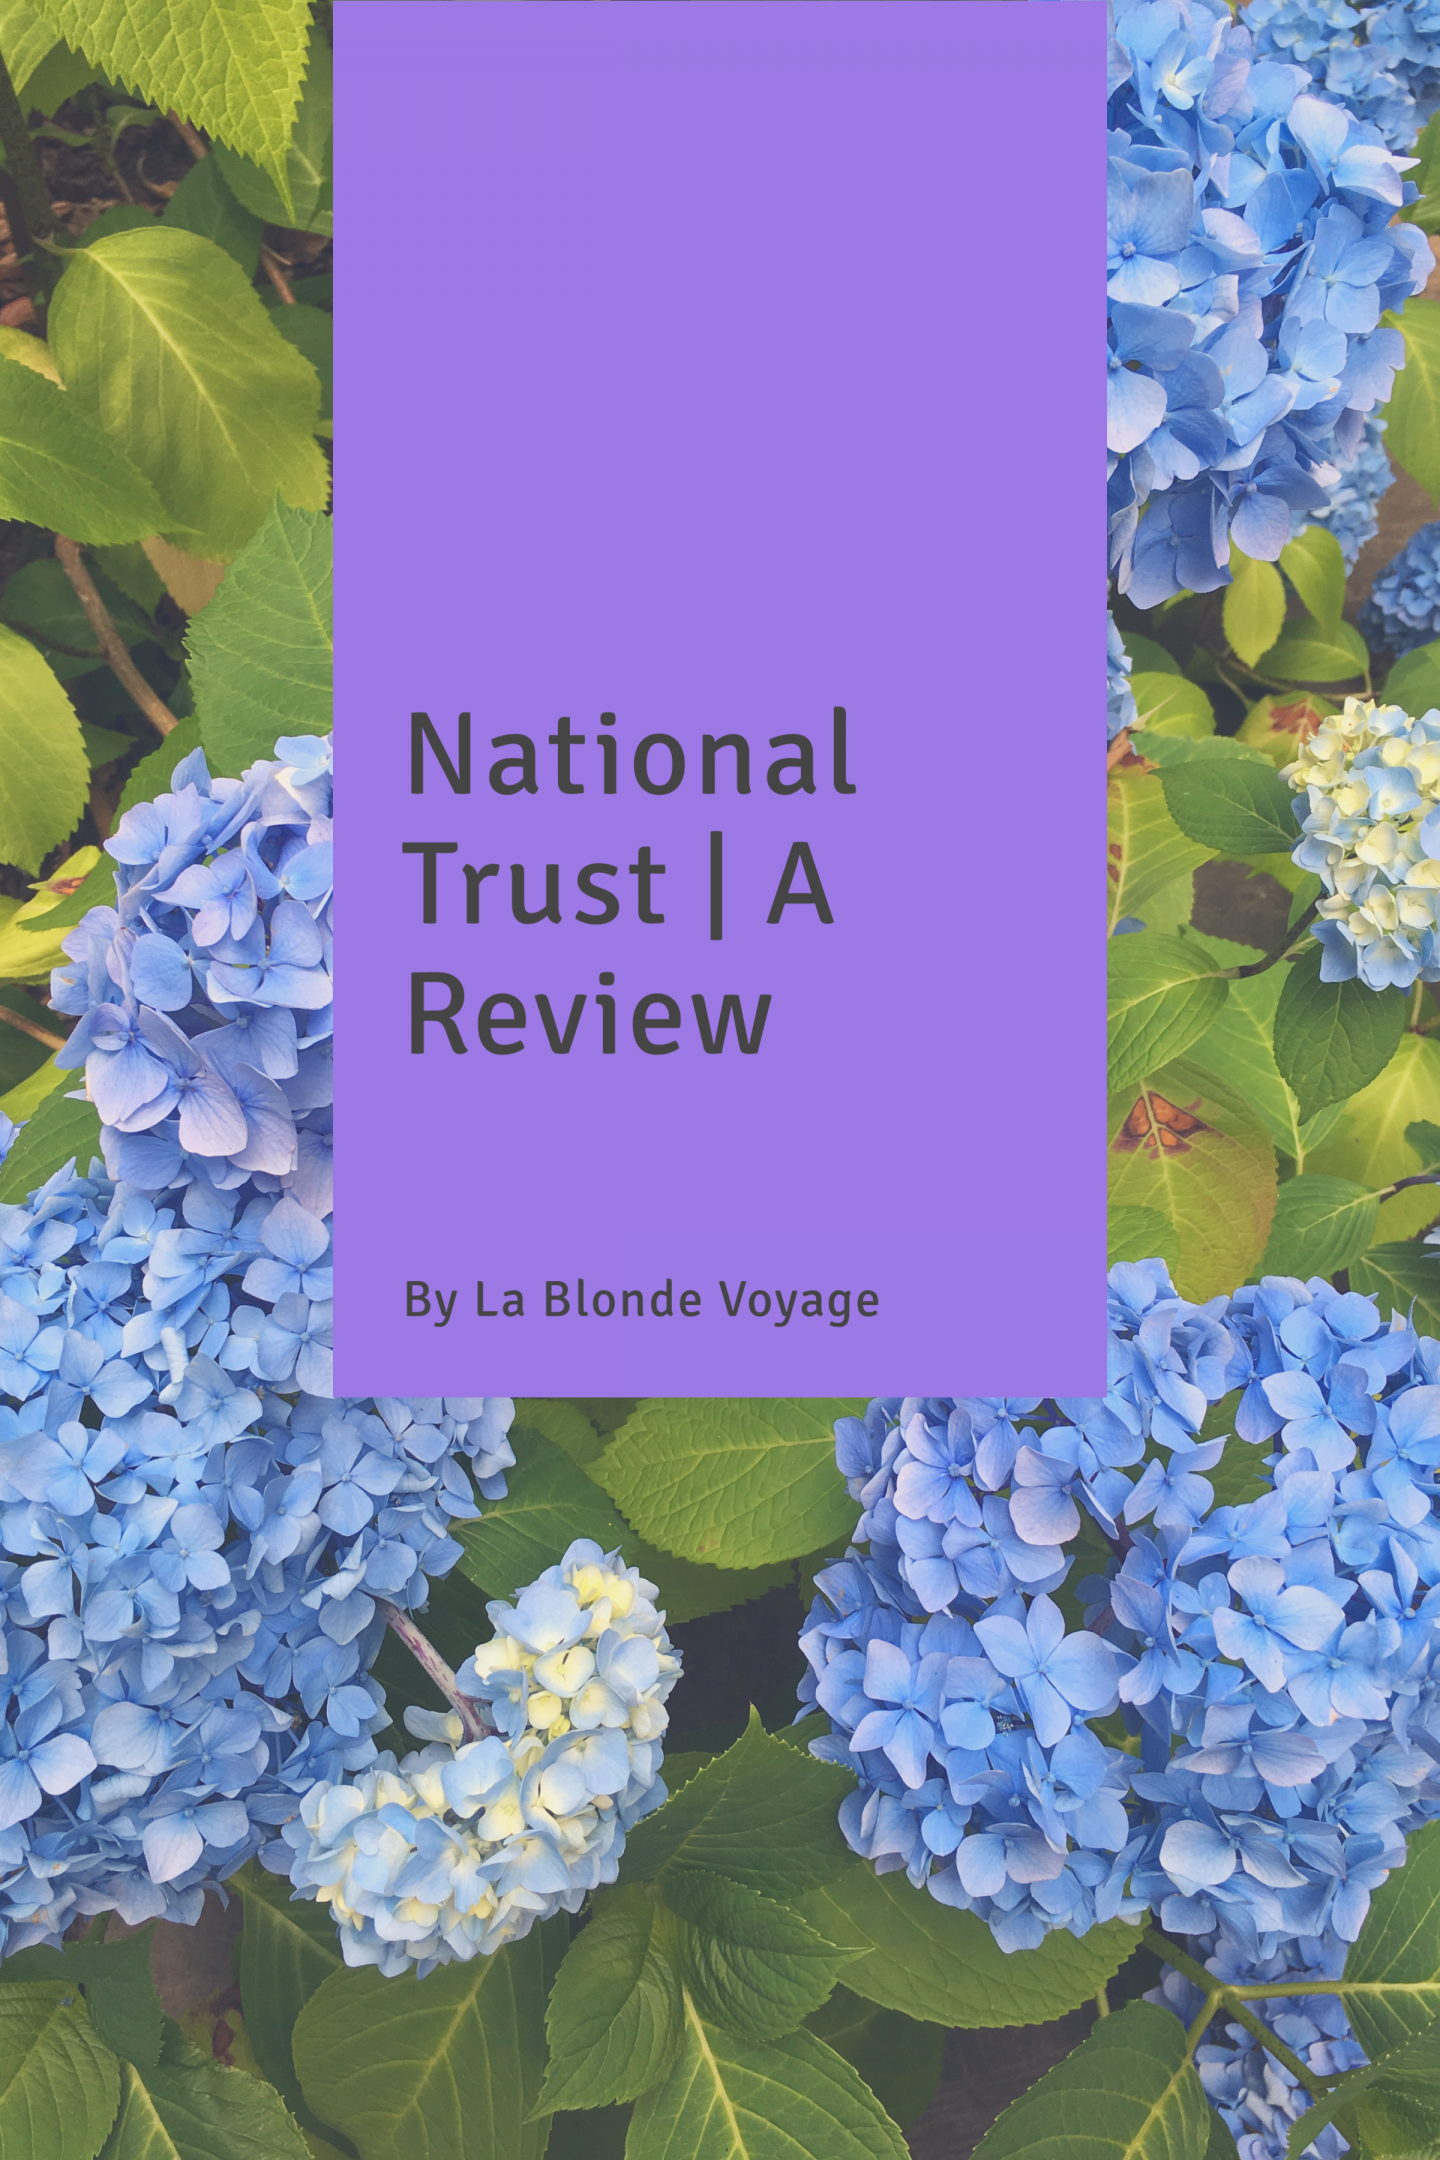 Nyman’s Garden: A National Trust Review